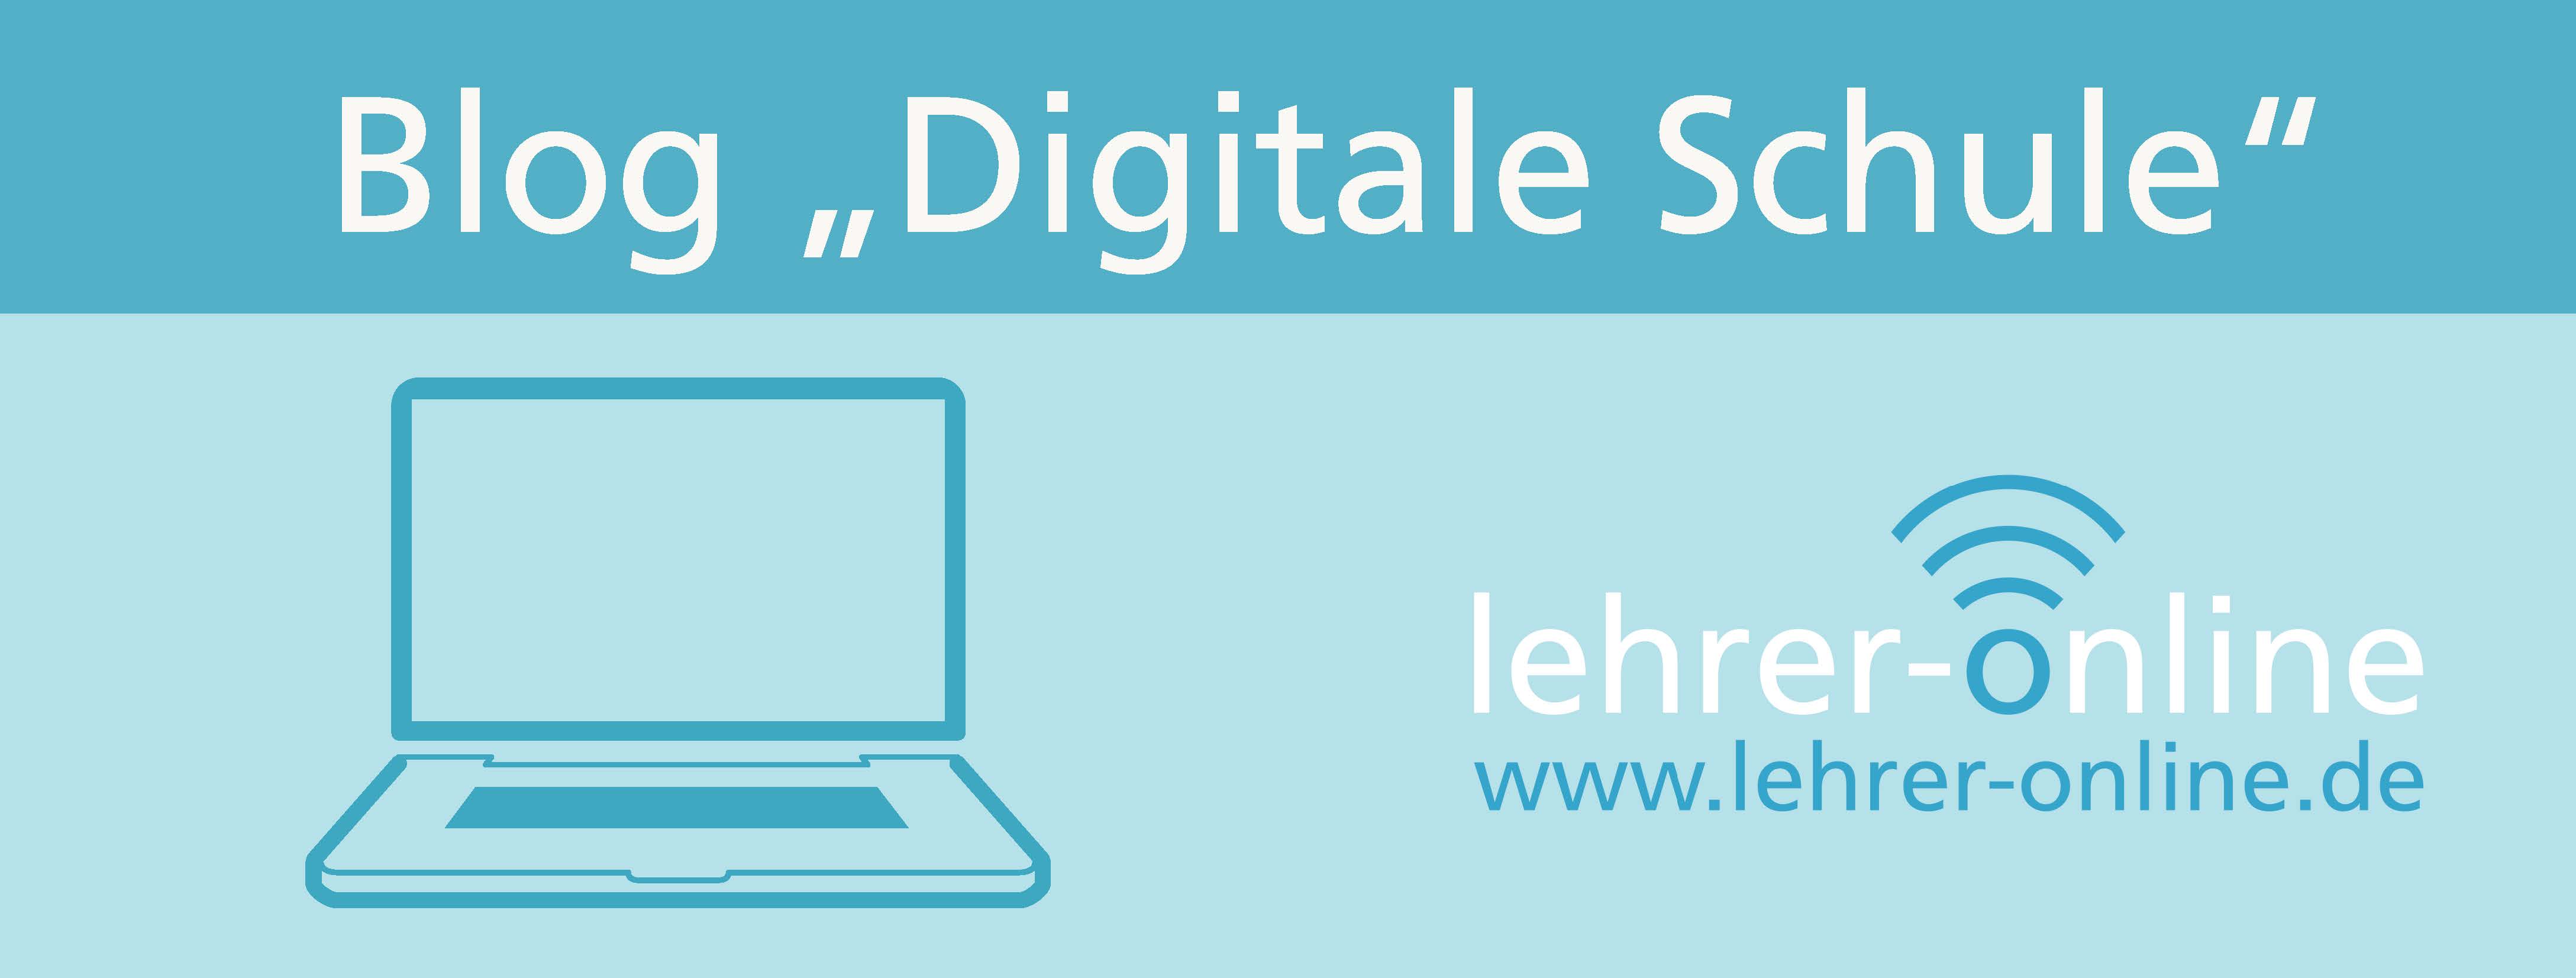 Blog digitale Schule